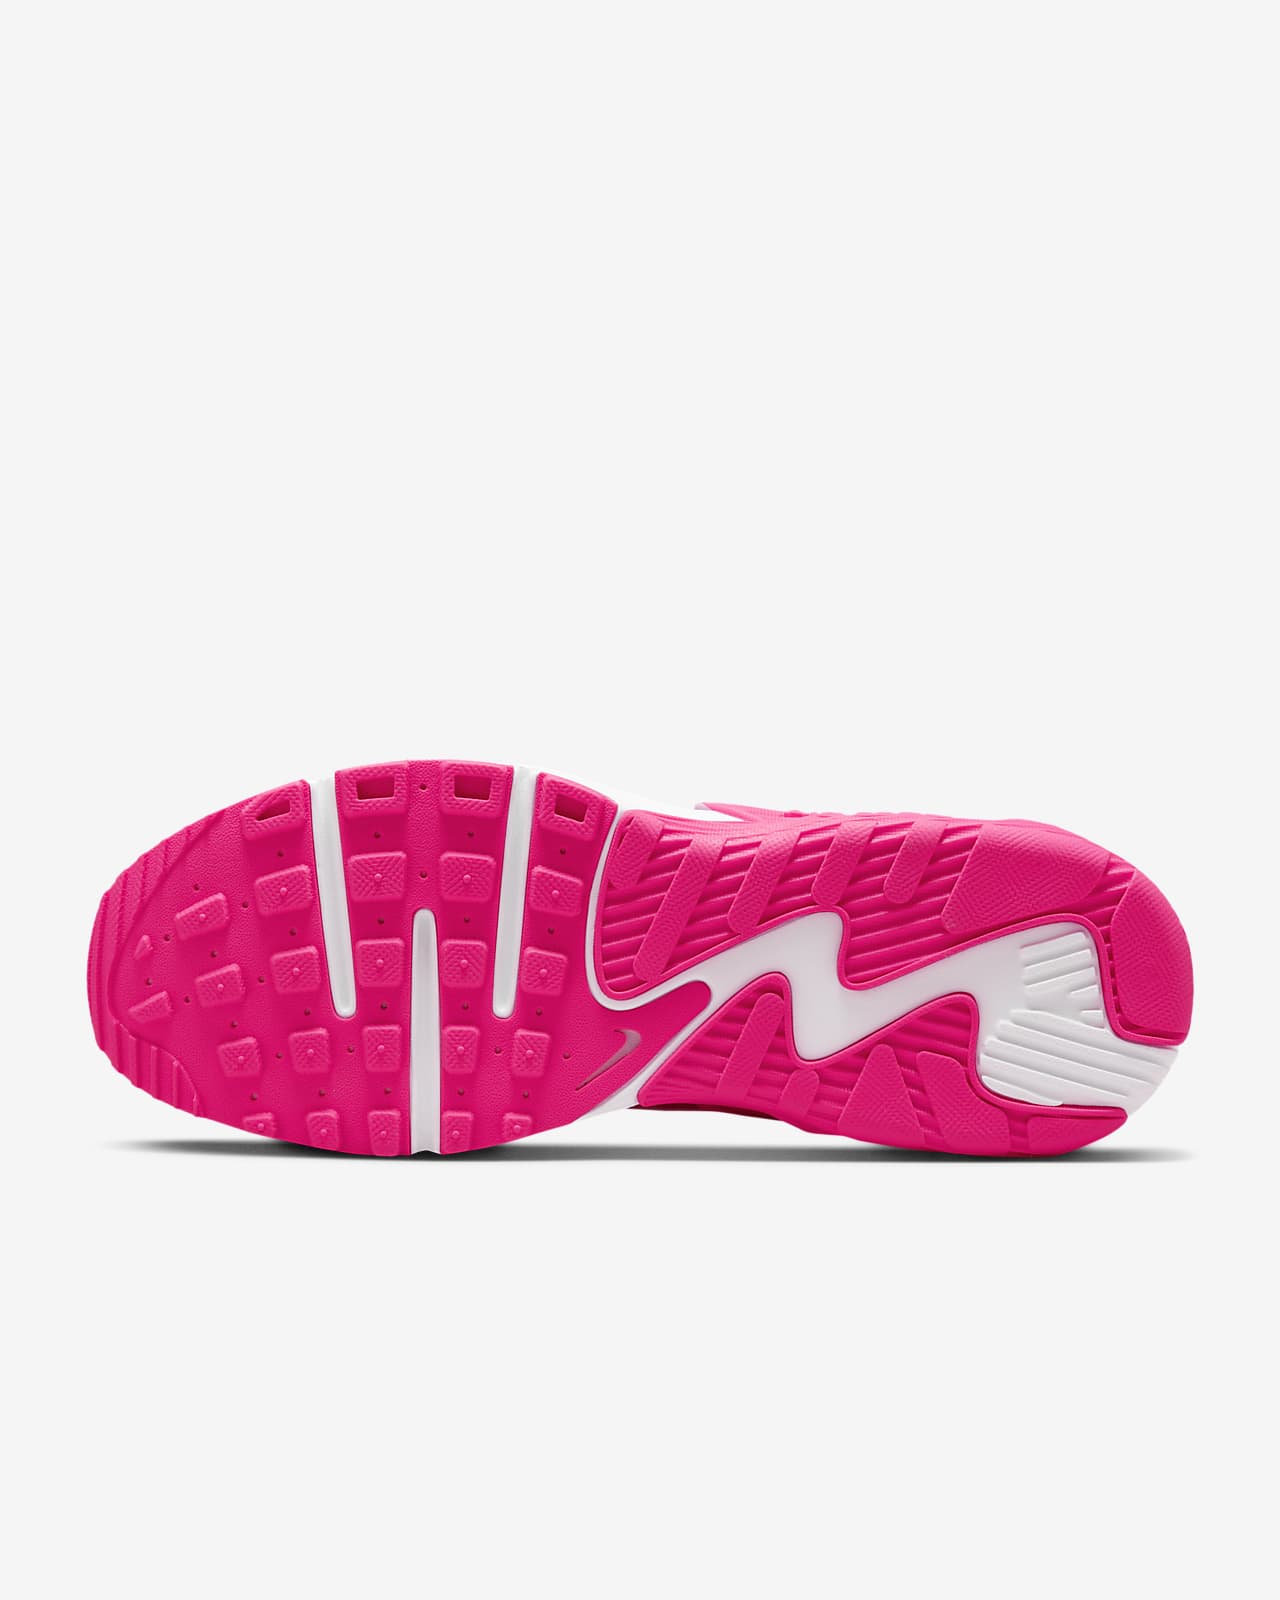 Calzado para mujer Nike Excee. Nike.com